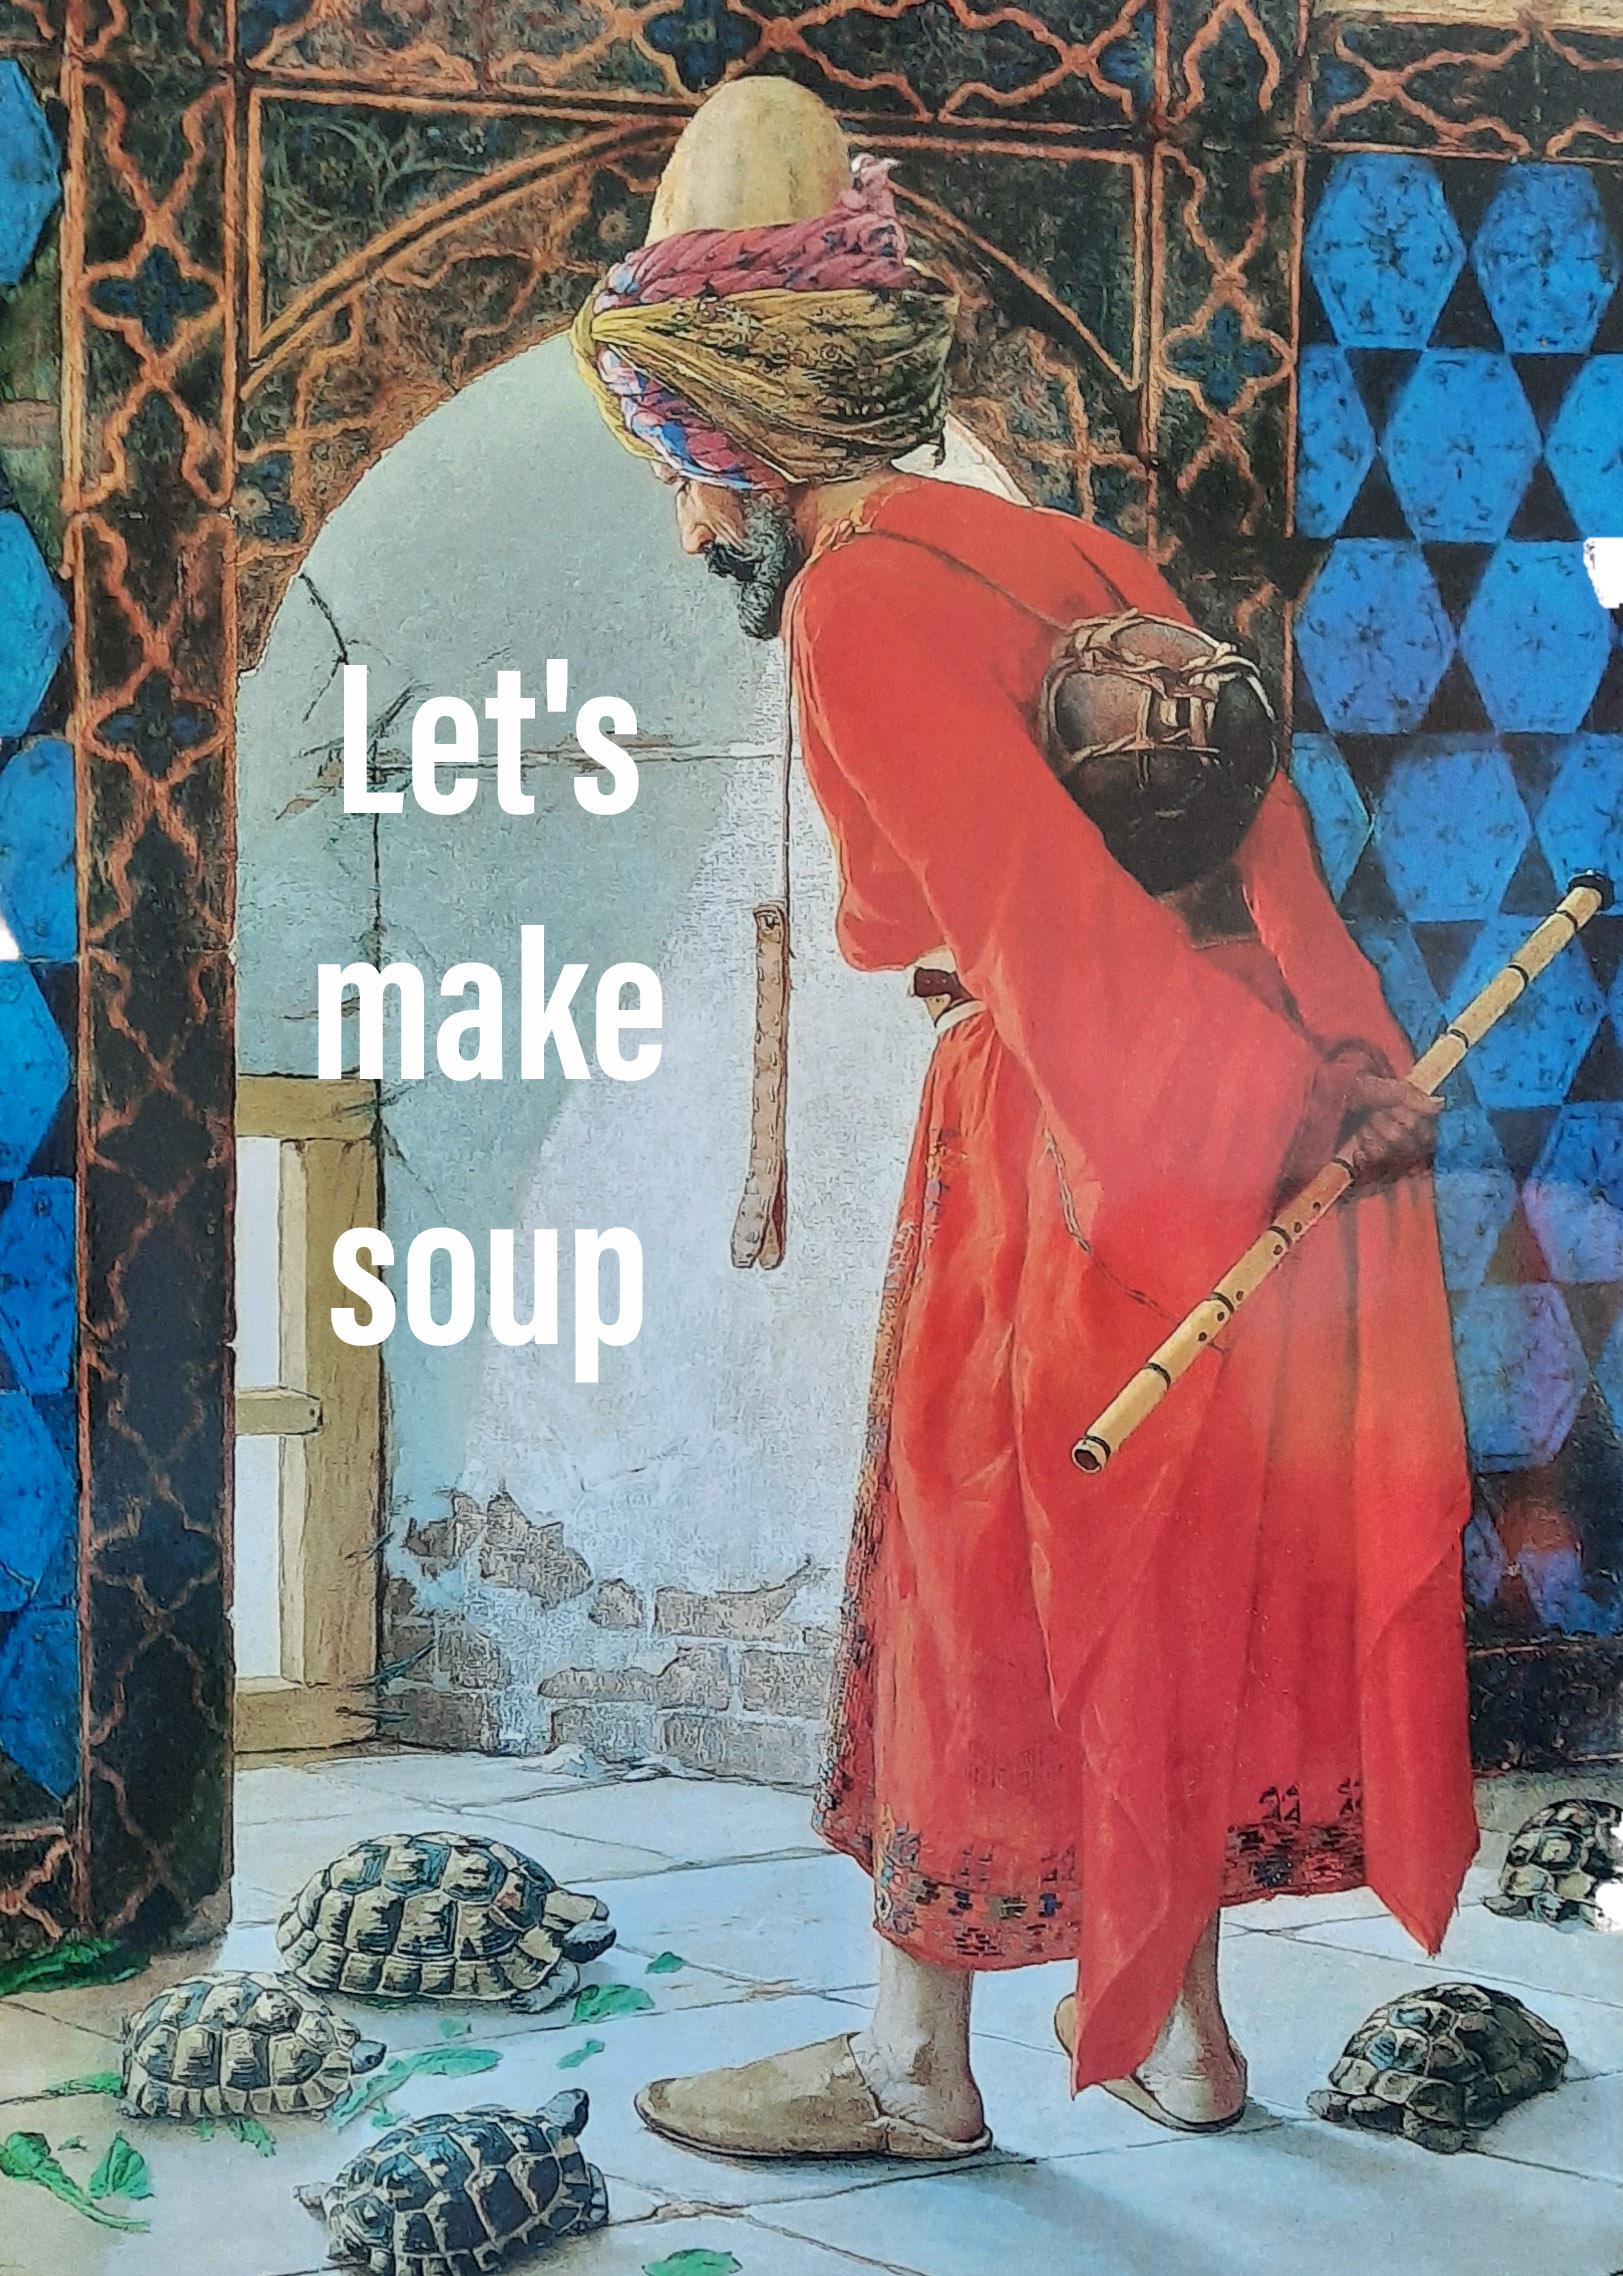 dank memes - tortoise trainer - Let's make soup